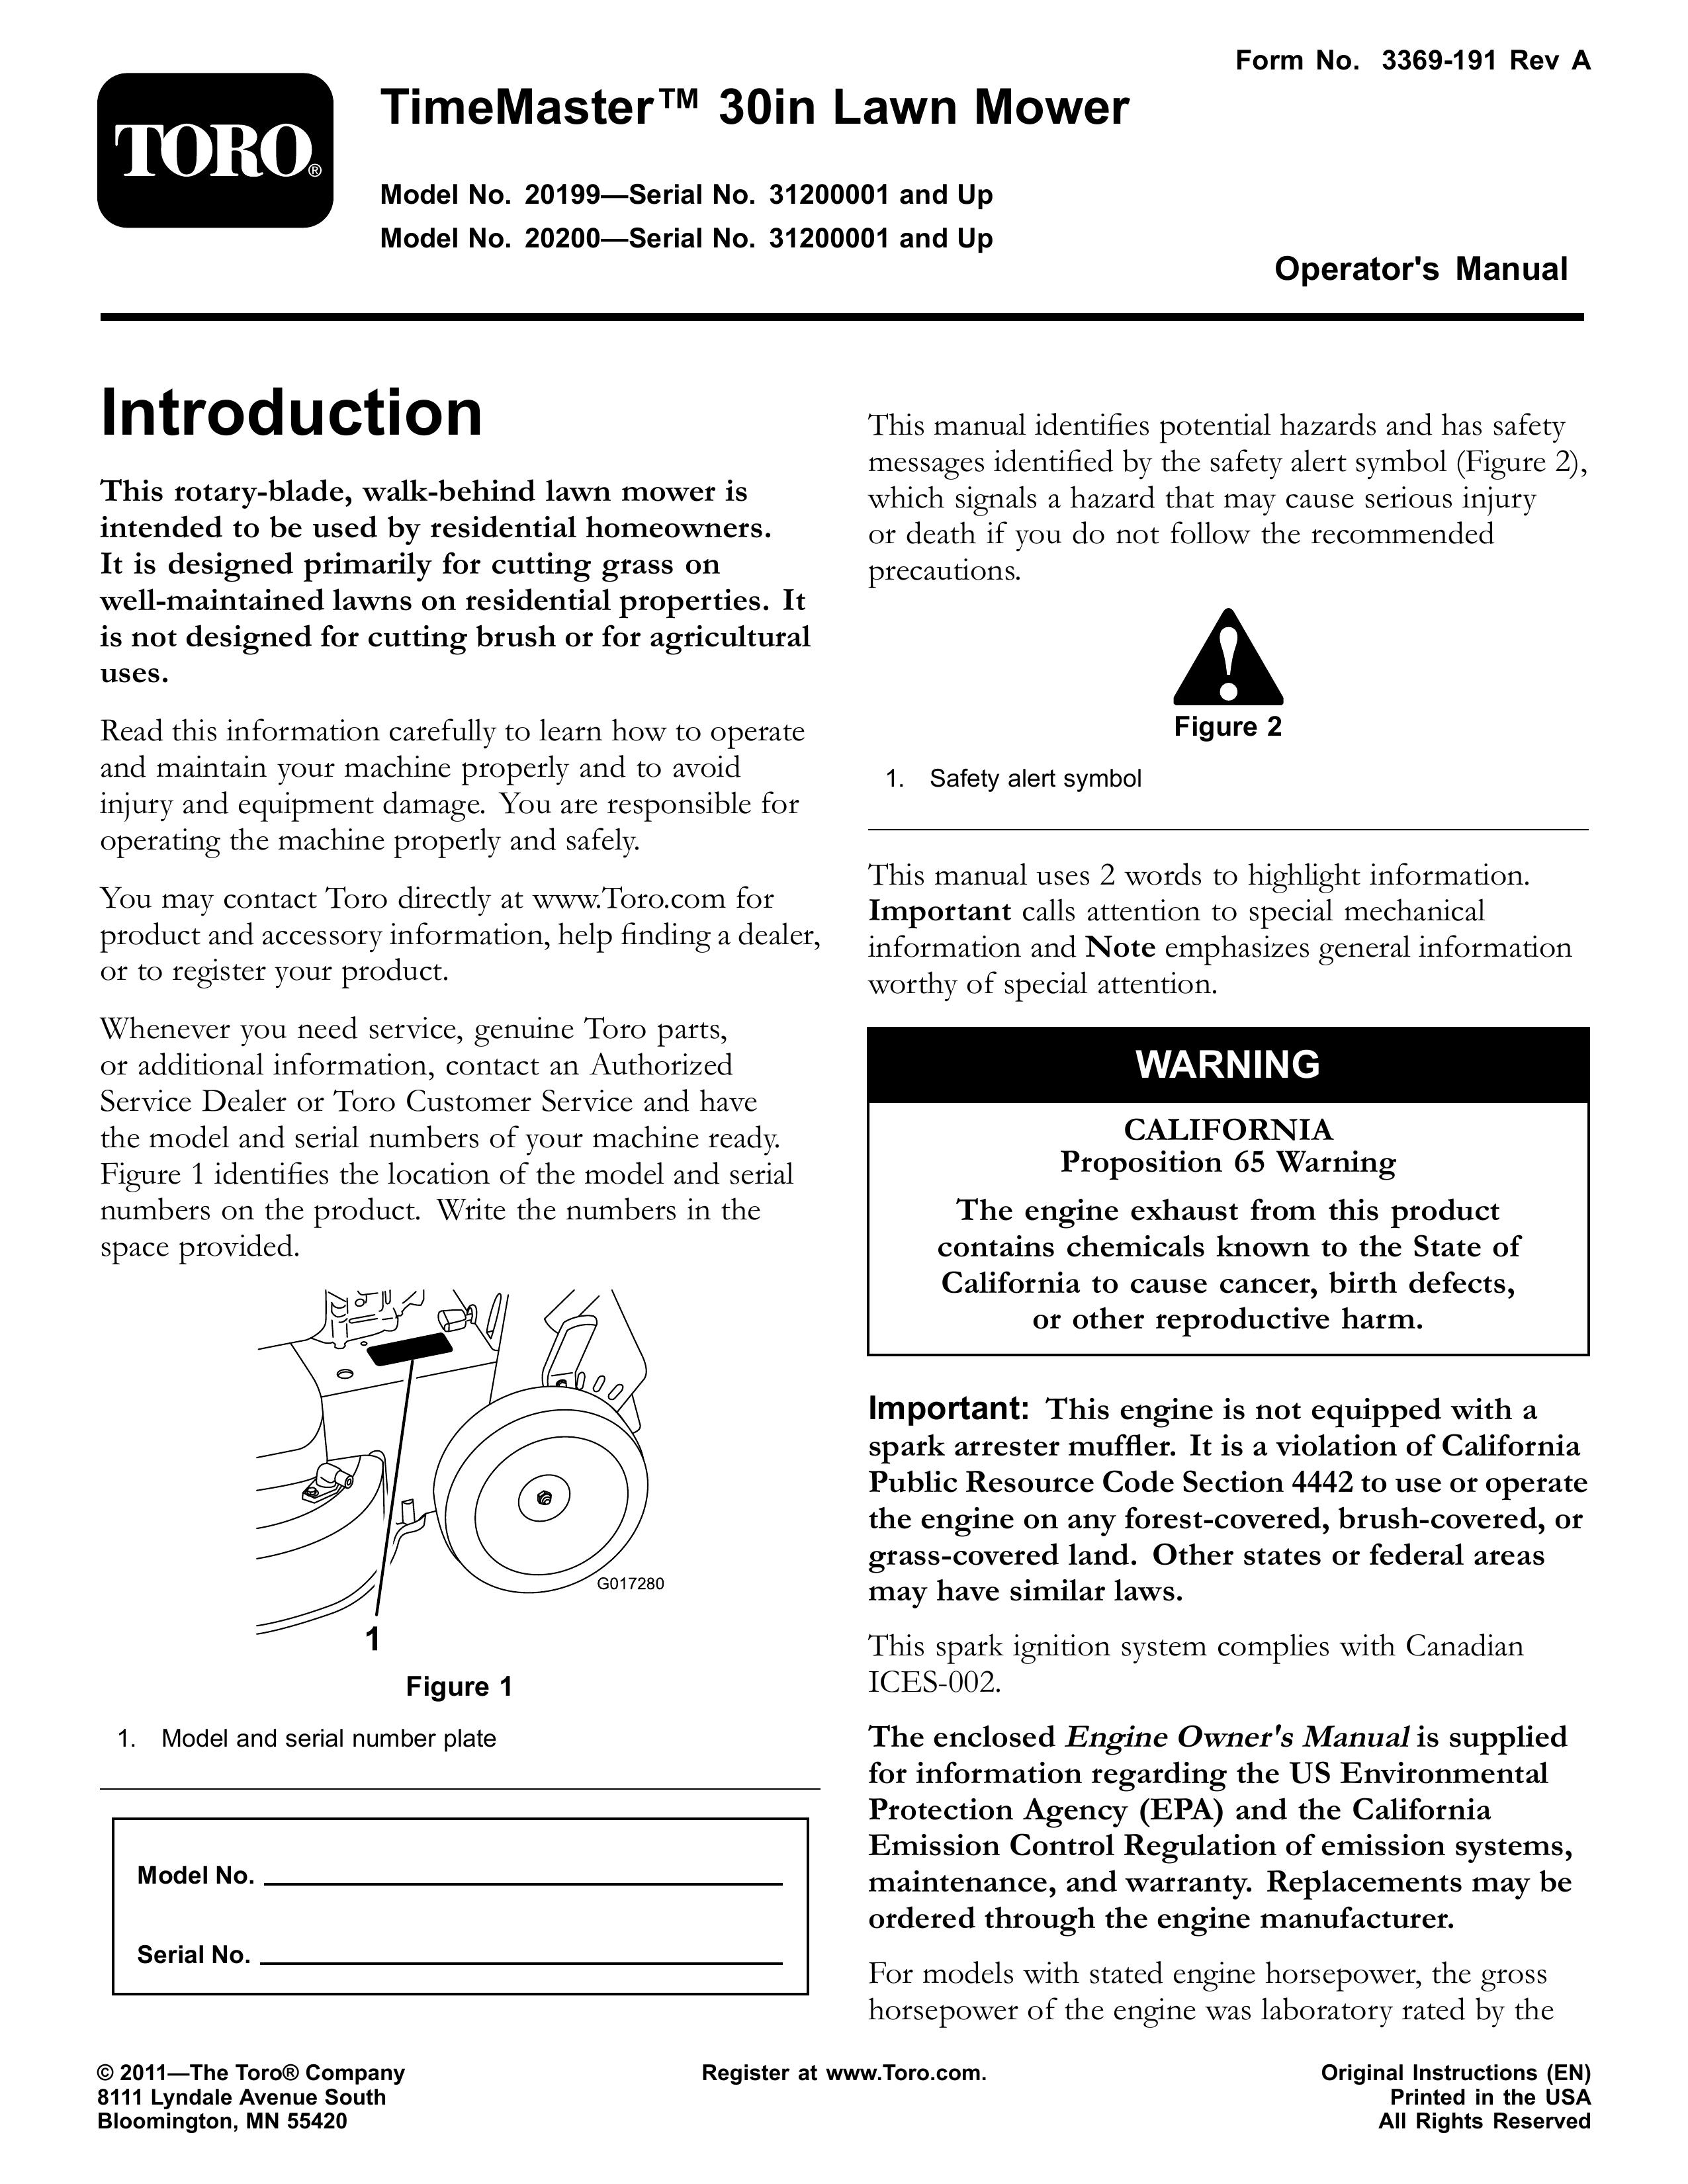 Toro 20199 Lawn Mower User Manual